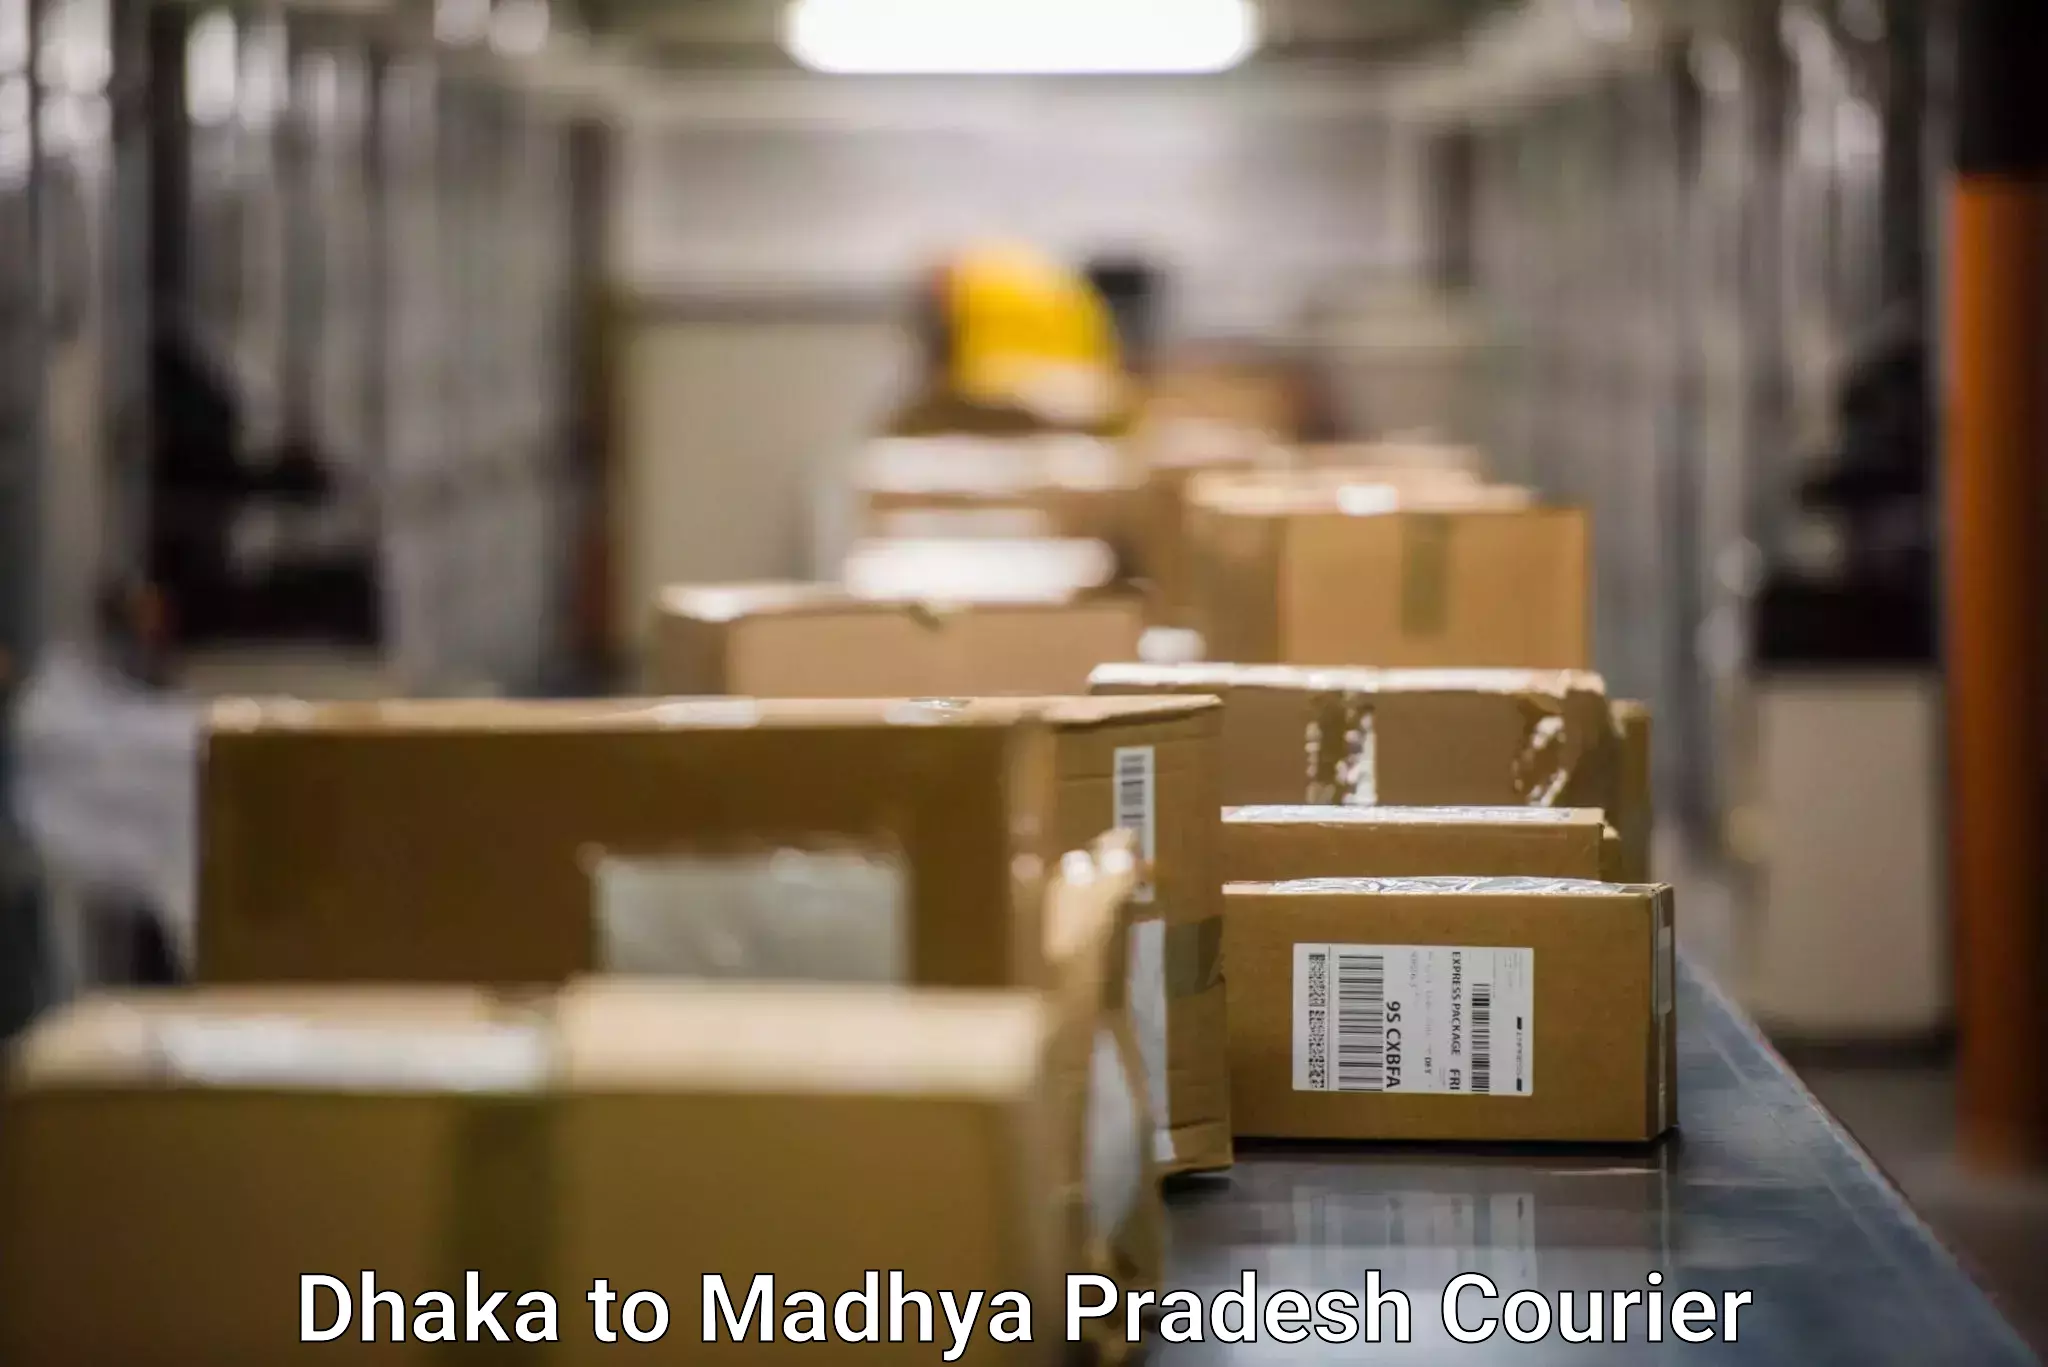 On-call courier service Dhaka to Vidisha